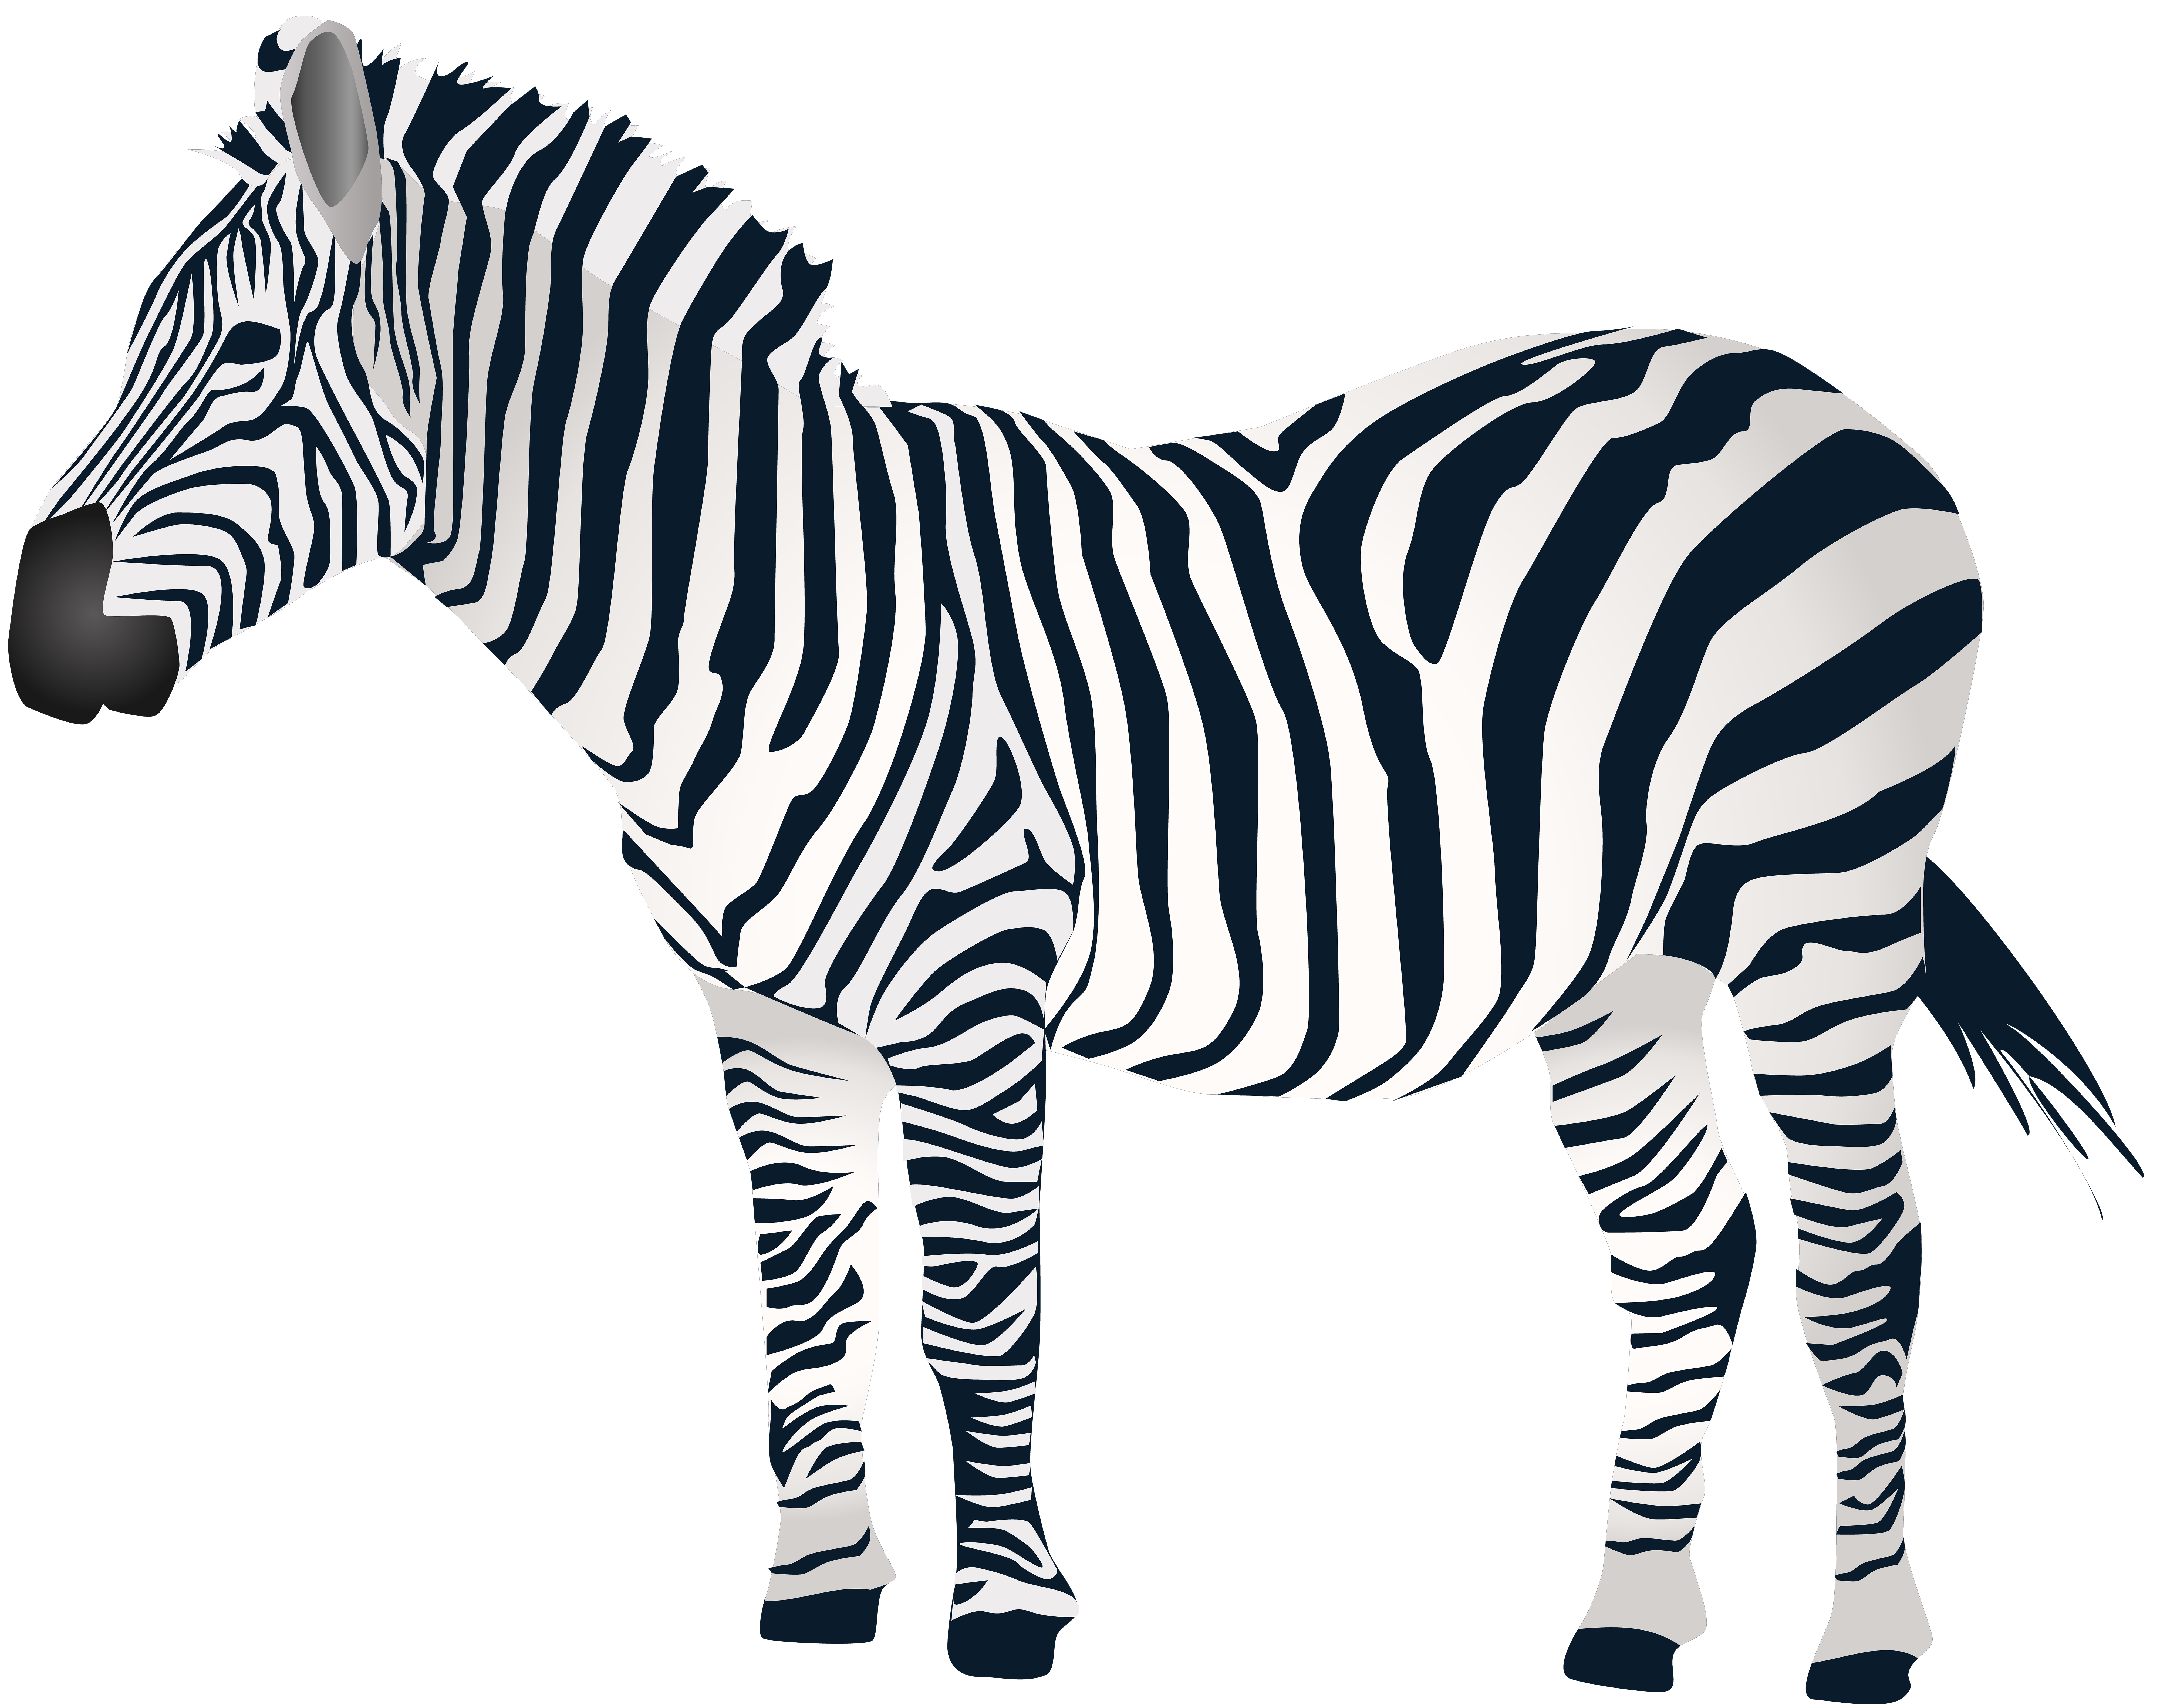 Zebra png clip.